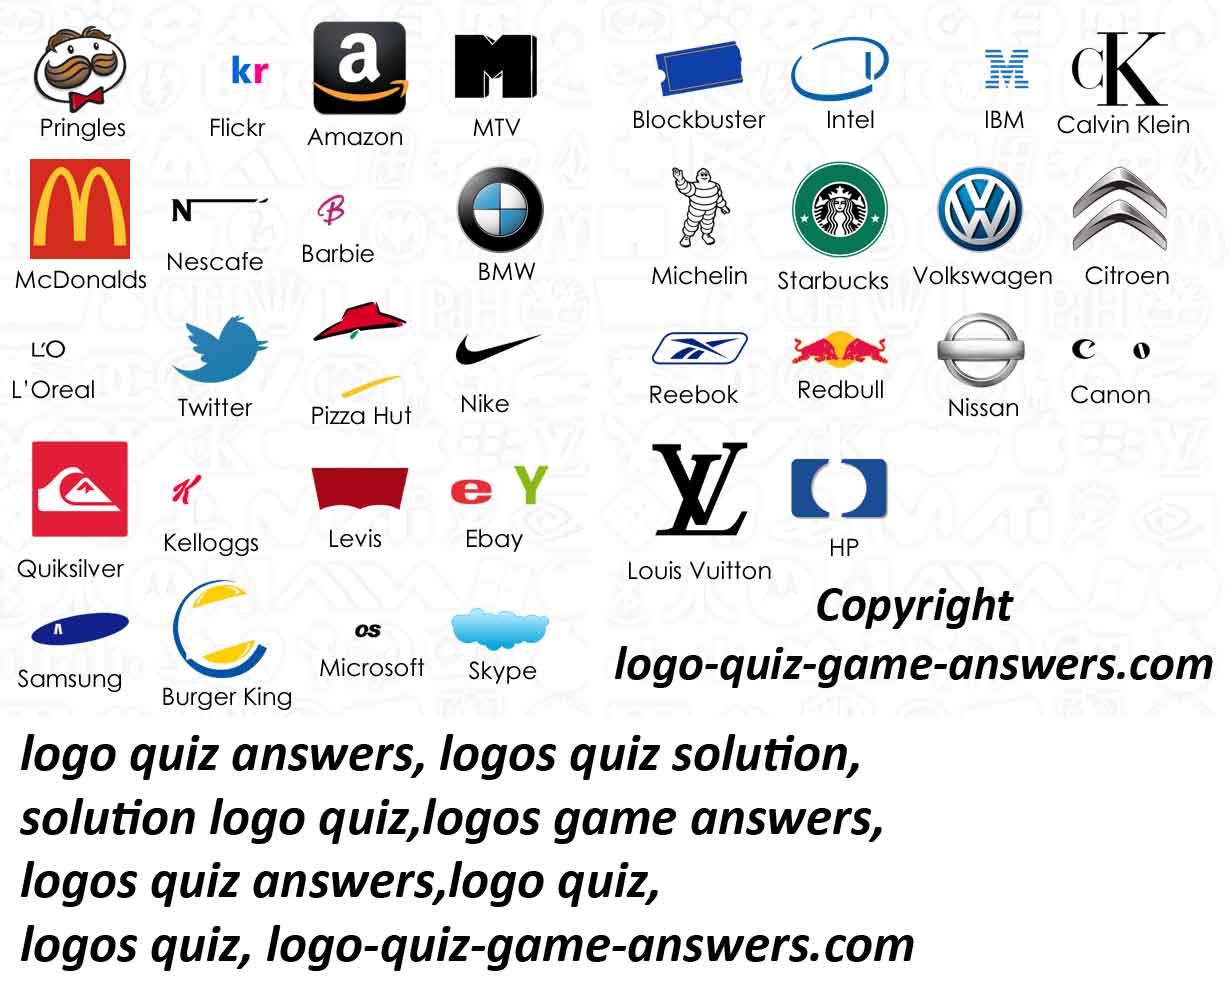 Answers.com Logo - All Logos 88: Logos Quiz Answers